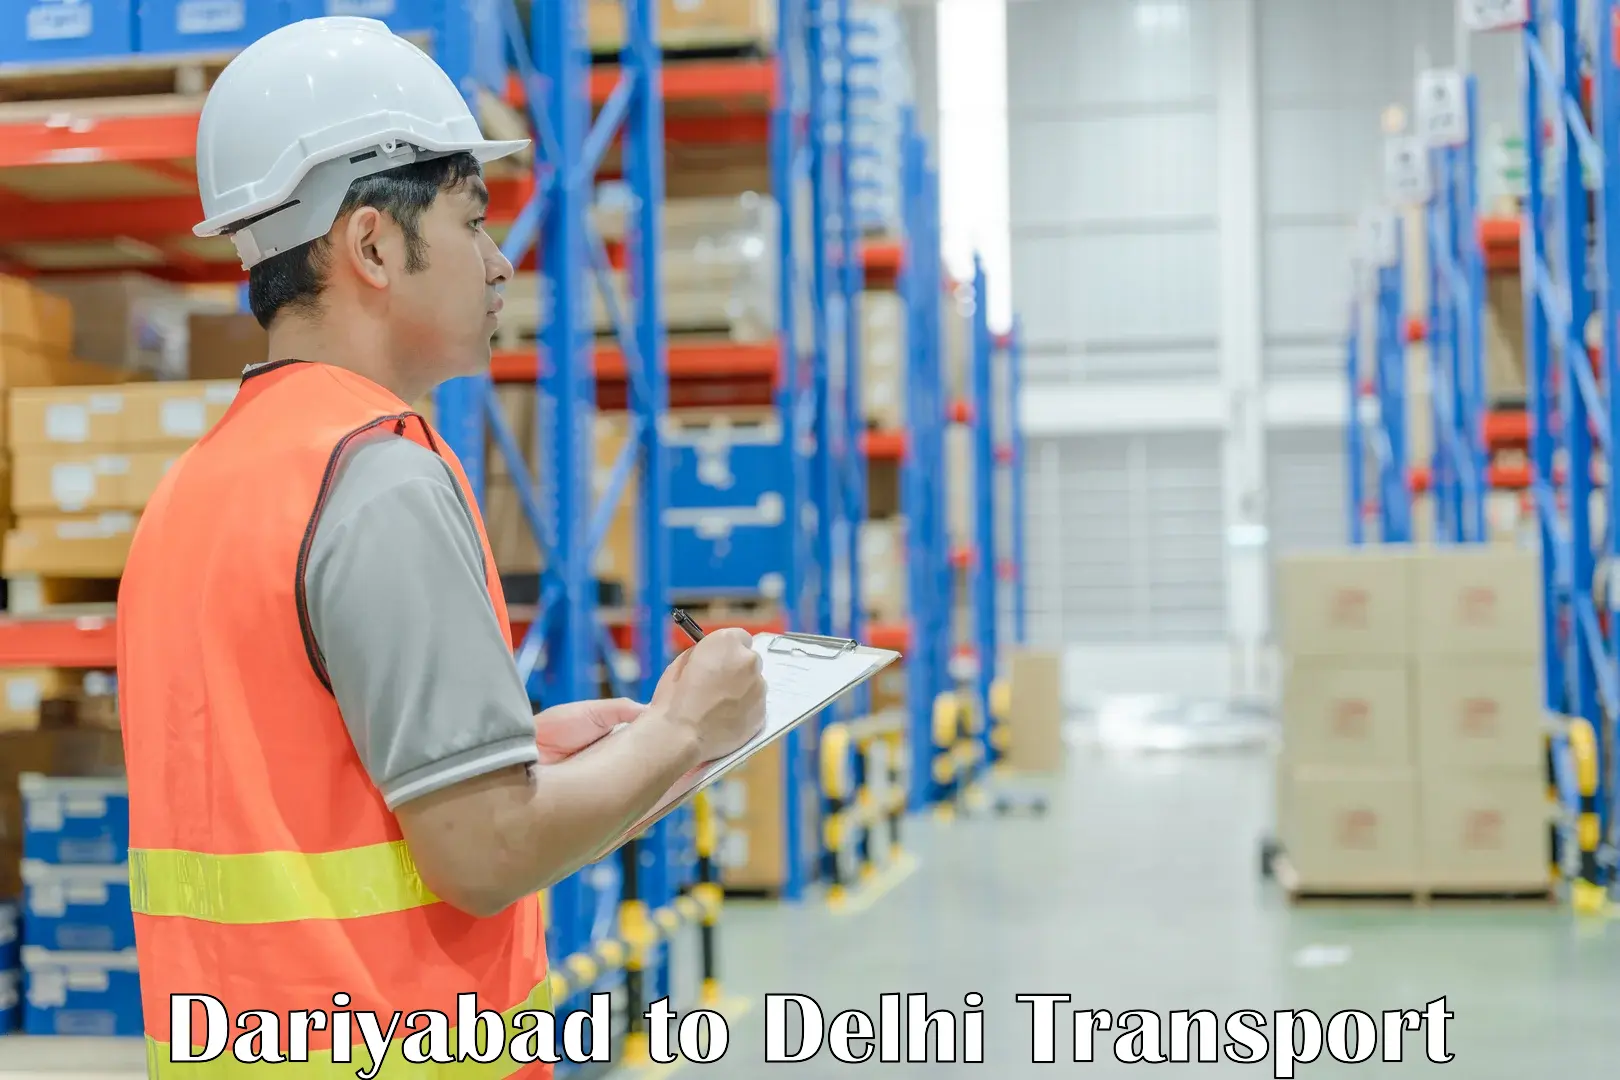 Shipping partner Dariyabad to East Delhi